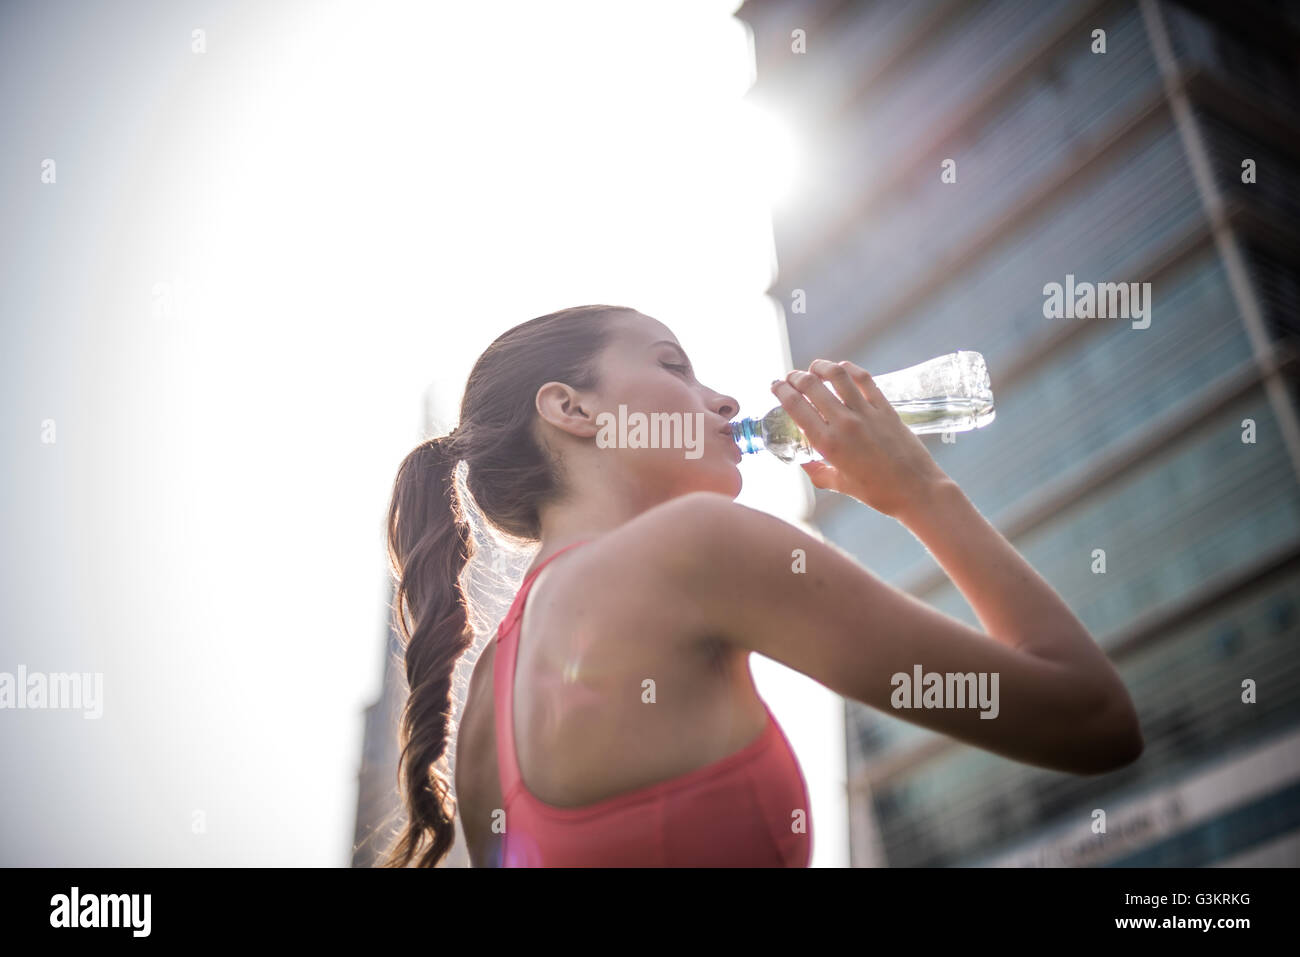 Woman training, drinking bottled water in park, Dubai, United Arab Emirates Stock Photo